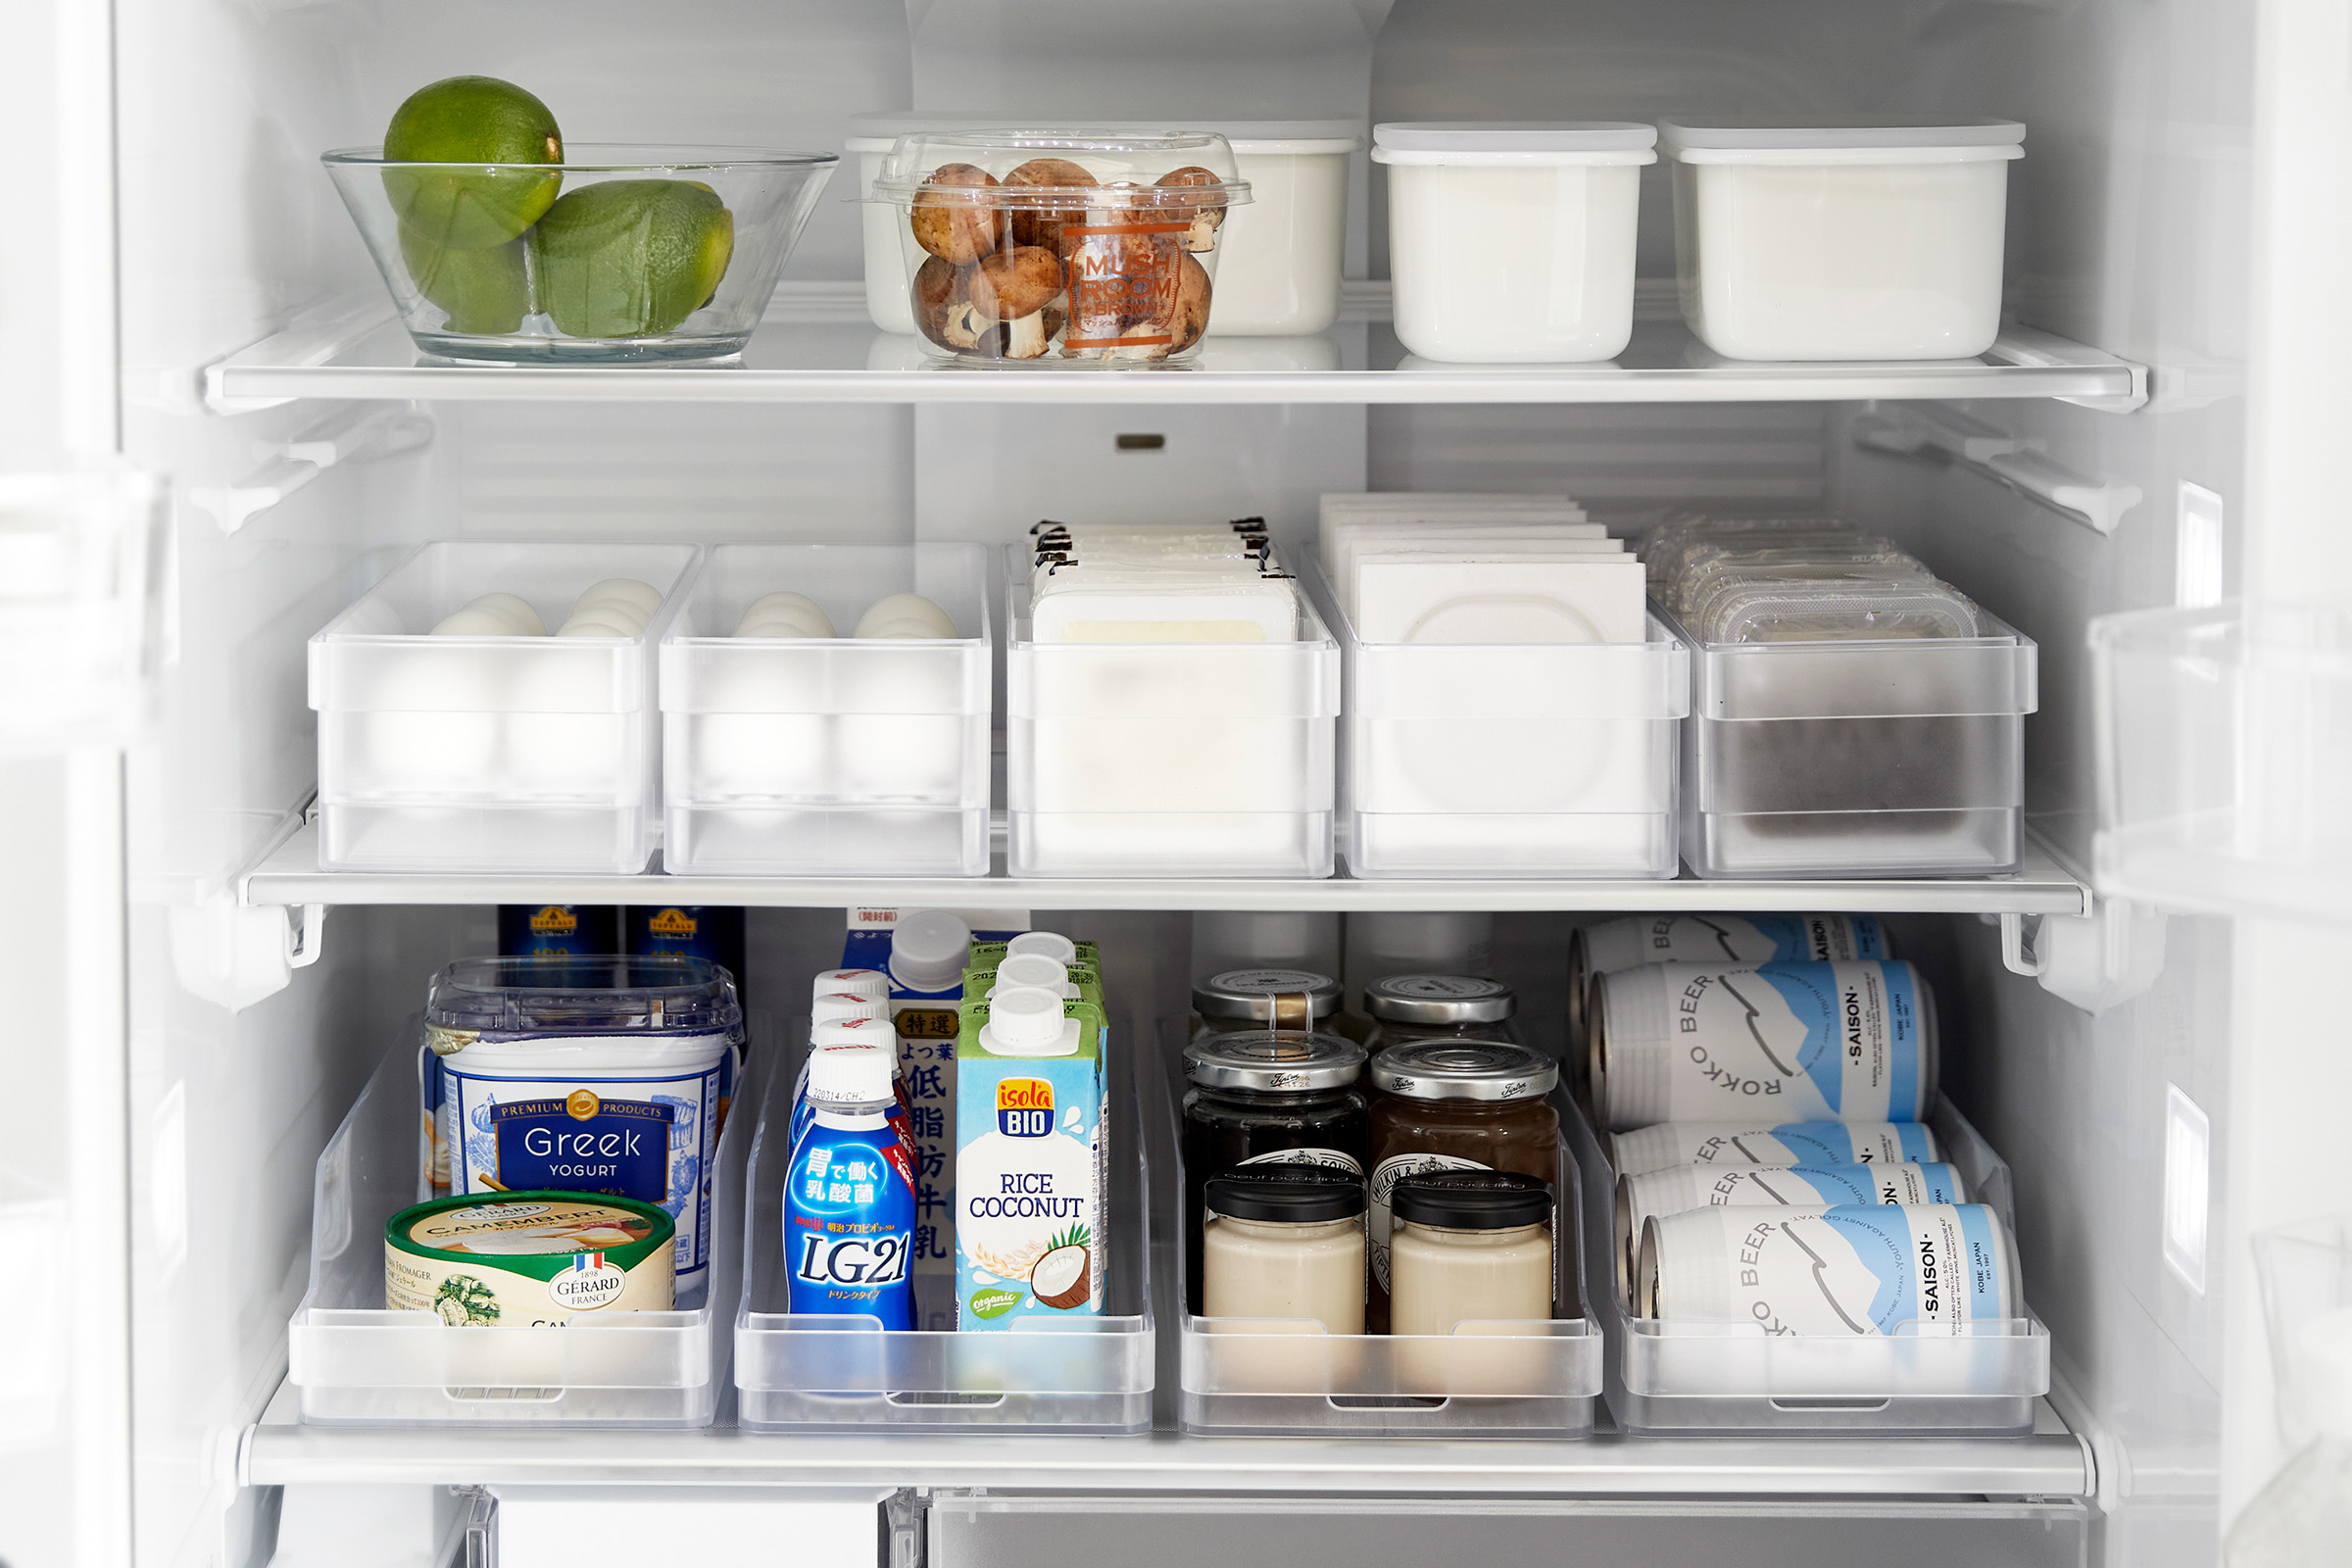 Full frontal view of Yamazaki Refrigerator Organizer Bins full of food inside a refrigerator